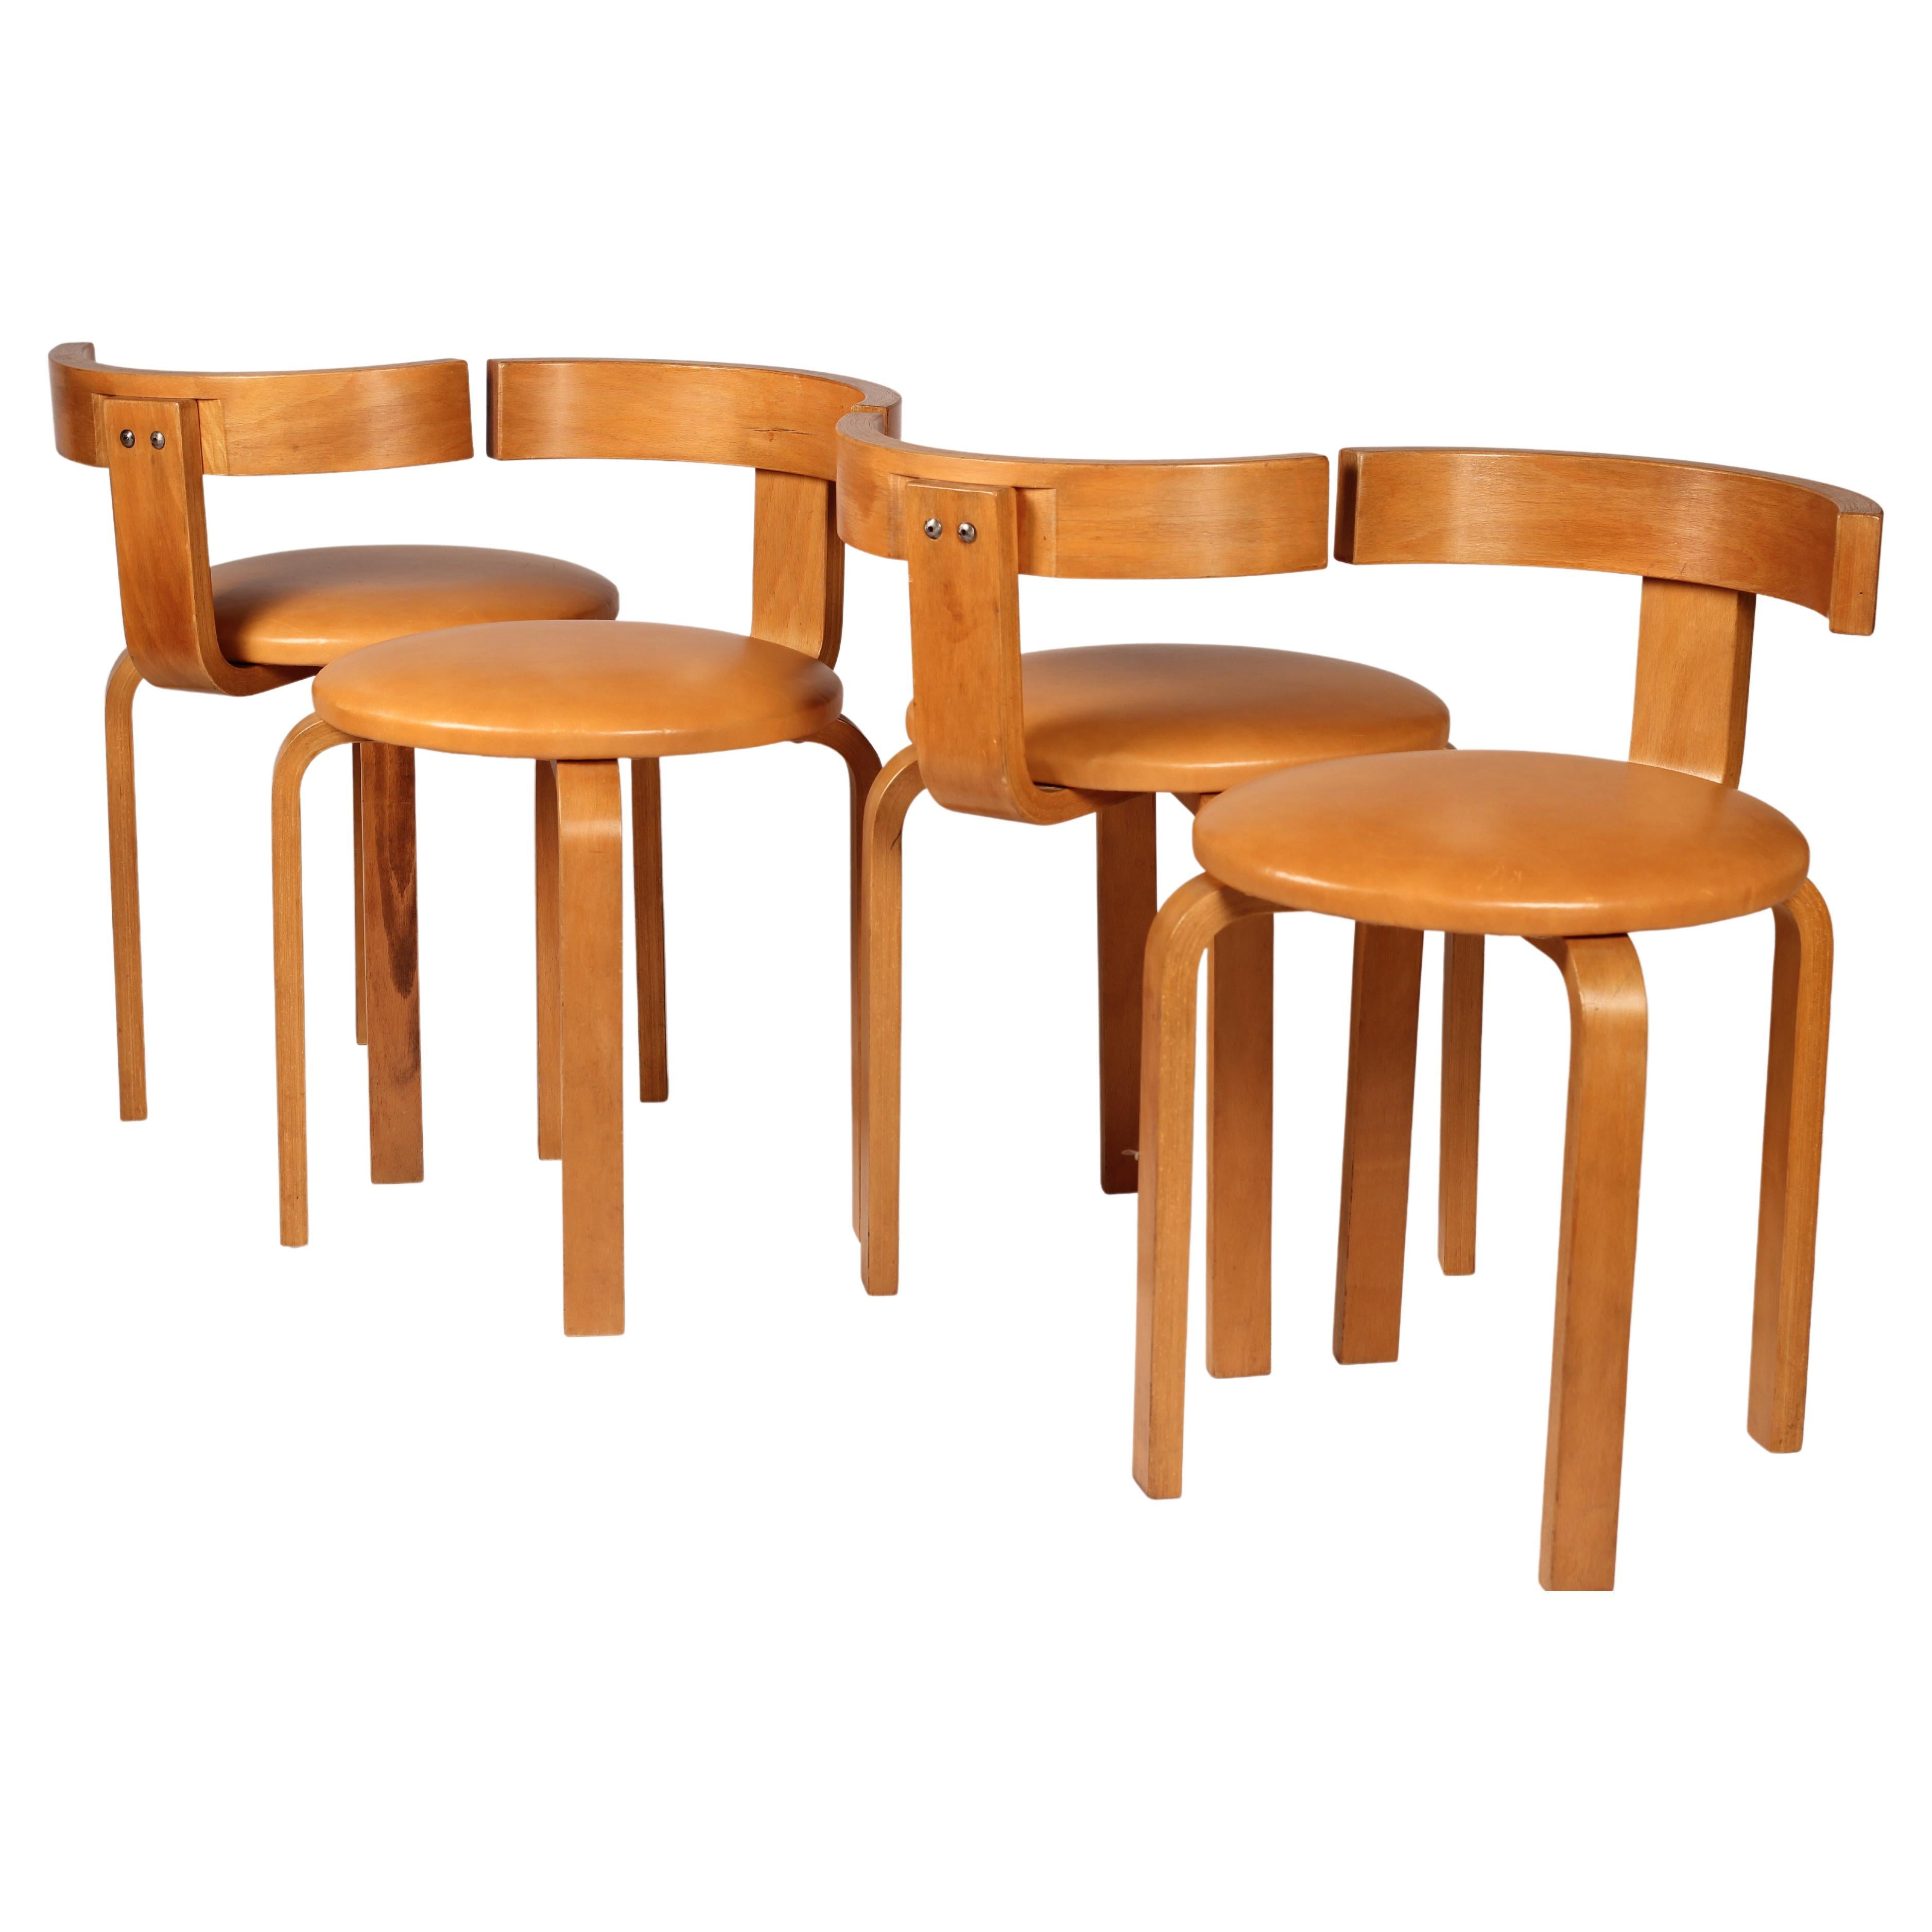 Danish Chairs by Georg Petersens for Mobelfabrik in Style of Alvar Aalto